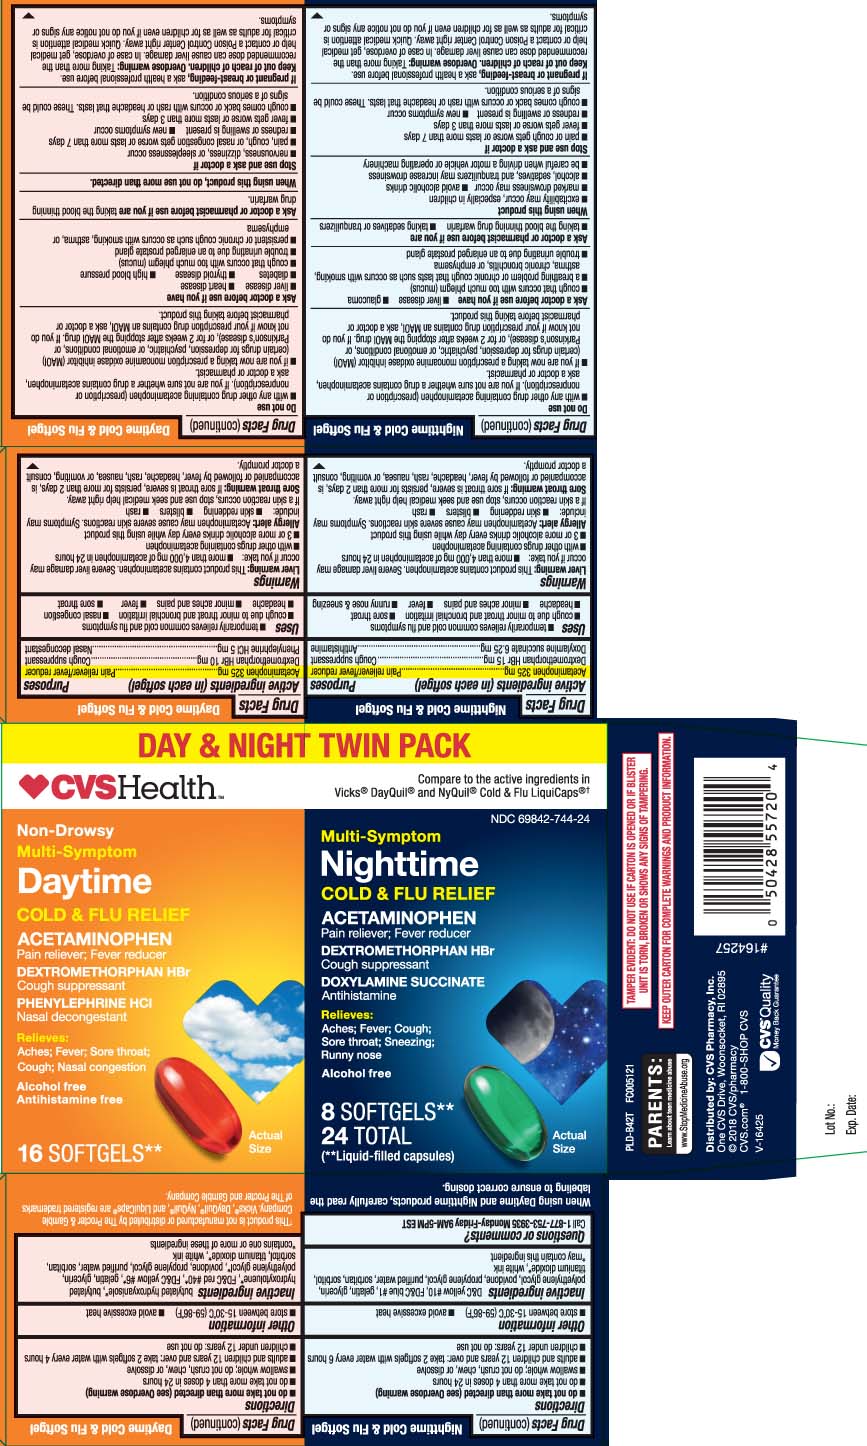 Acetaminophen 325 mg, Dextromethorphan HBr 10 mg, Phenylephrine HCI 5 mg Acetaminophen 325 mg, Dextromethorphan HBr 15 mg, Doxylamine succinate 6.25 mg